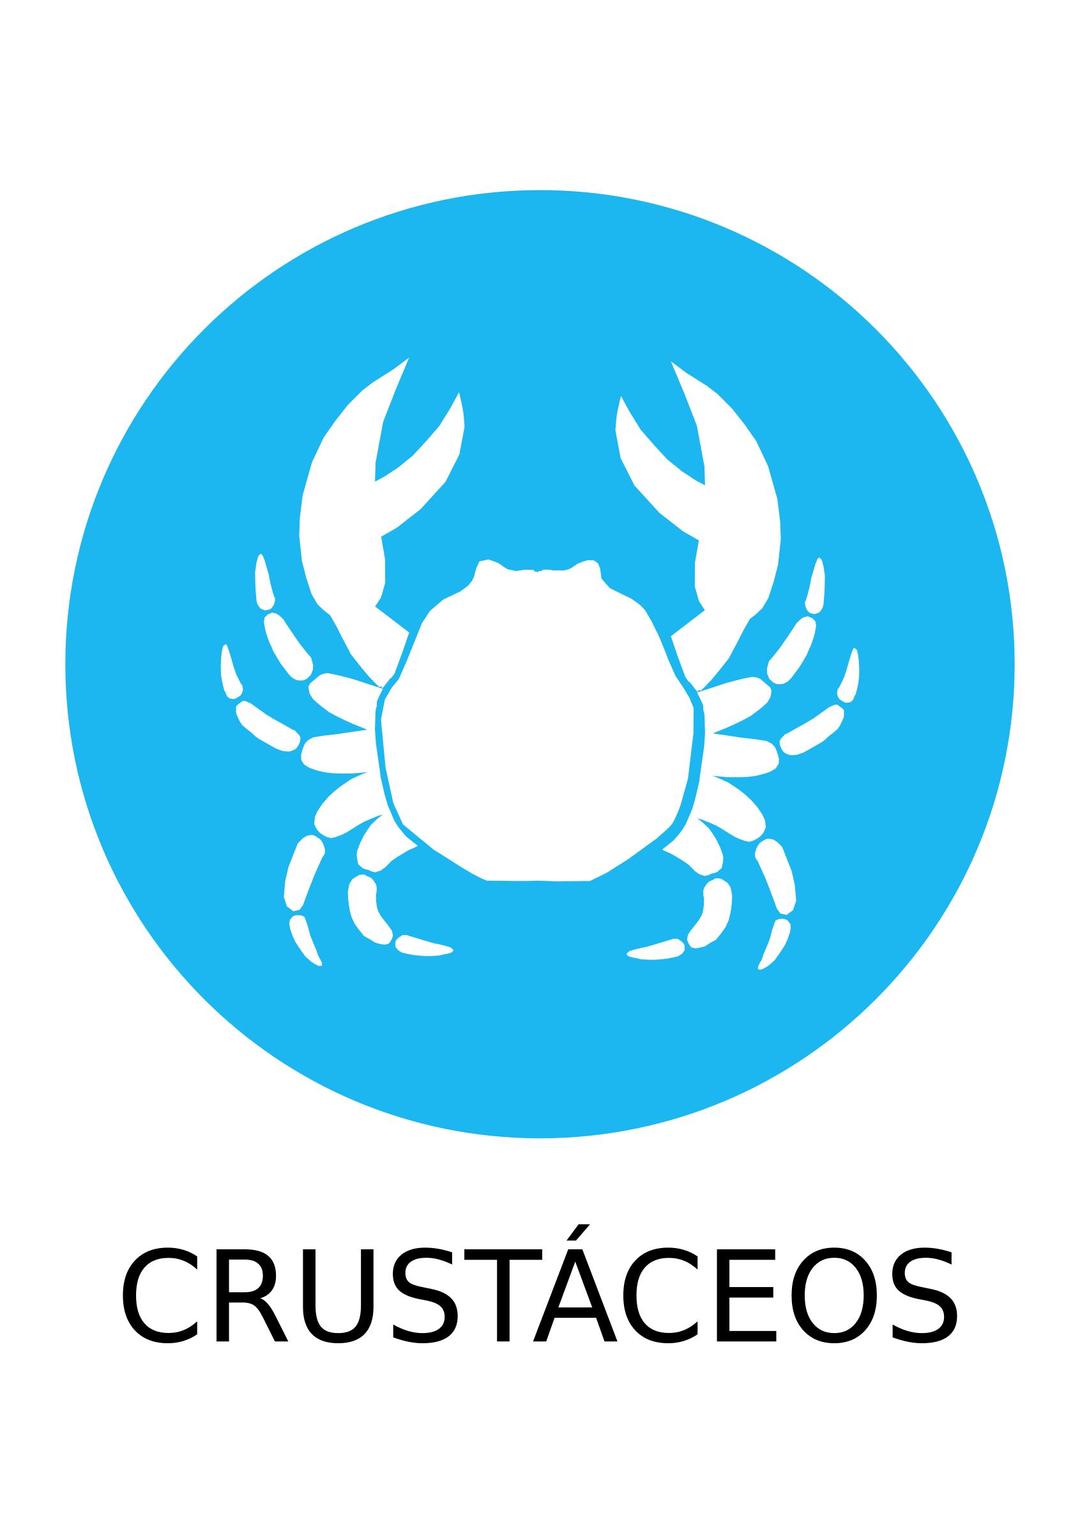 Alérgeno Crustaceo/Crustaceans png transparent